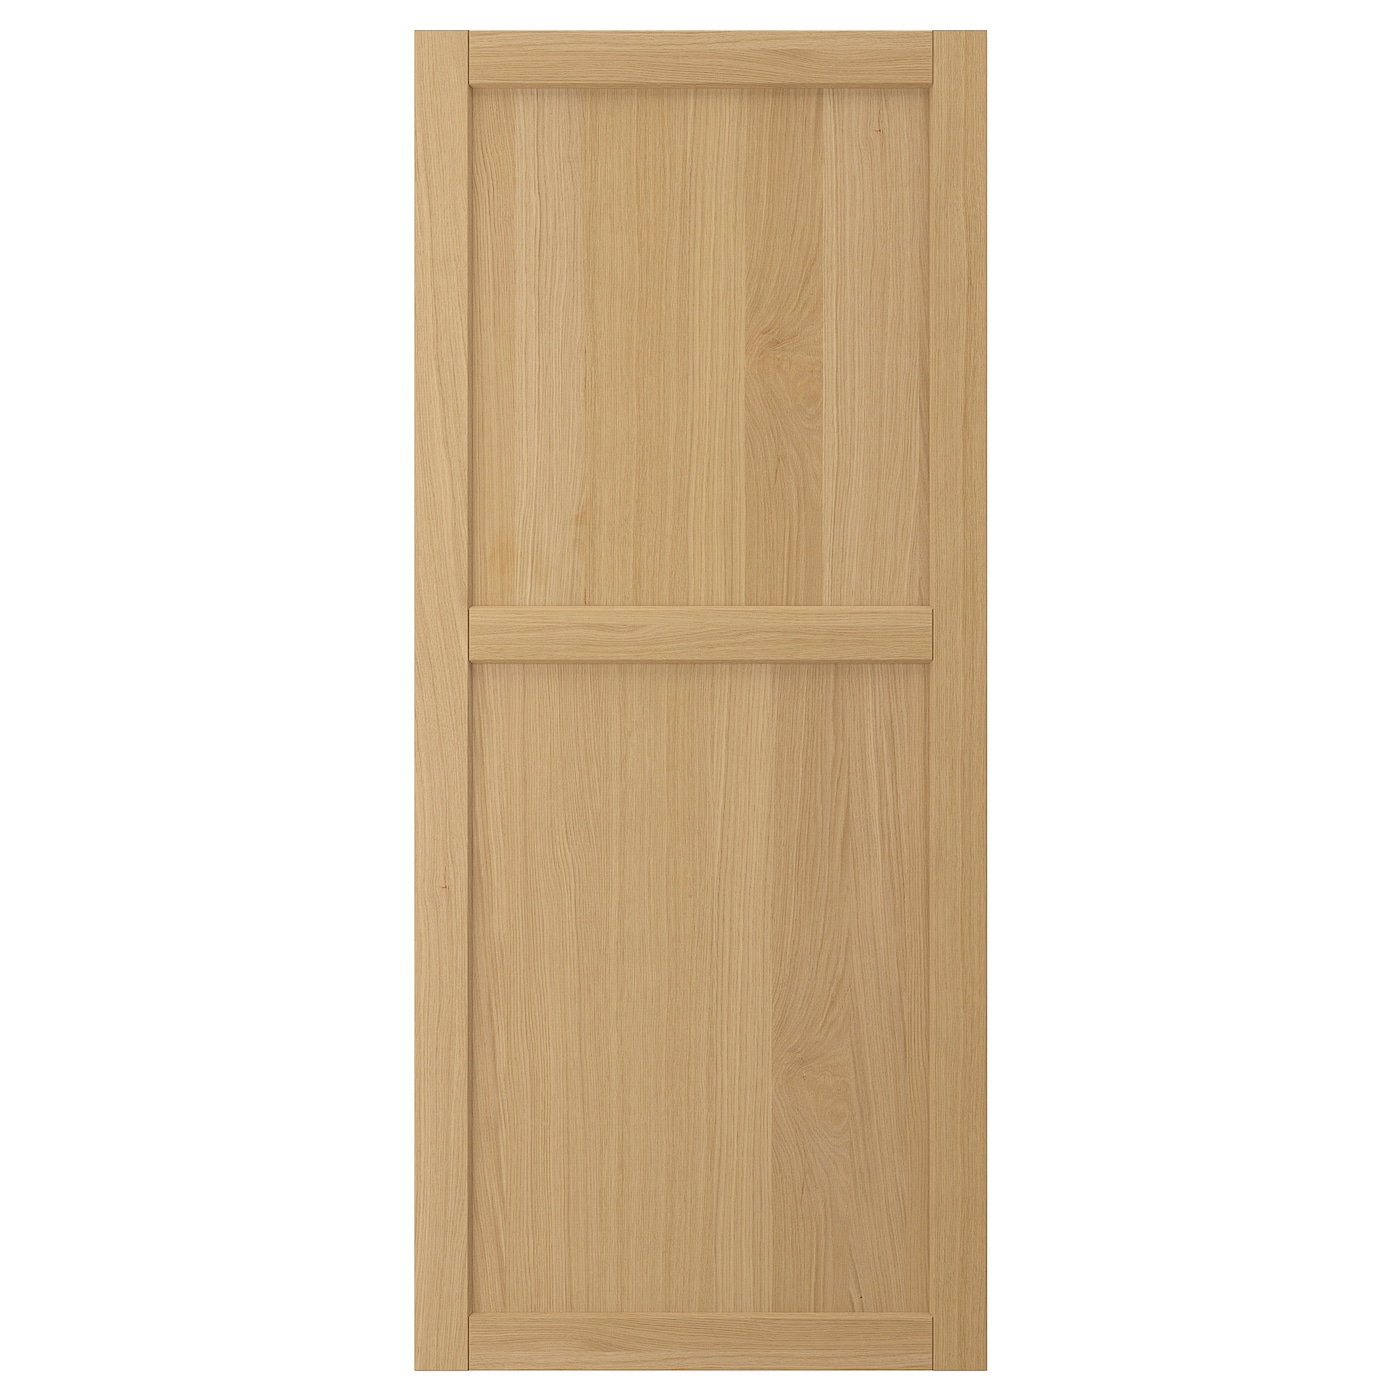 Дверца - FORSBACKA IKEA/ ФОРСБАКА ИКЕА,  140х60 см, под беленый дуб